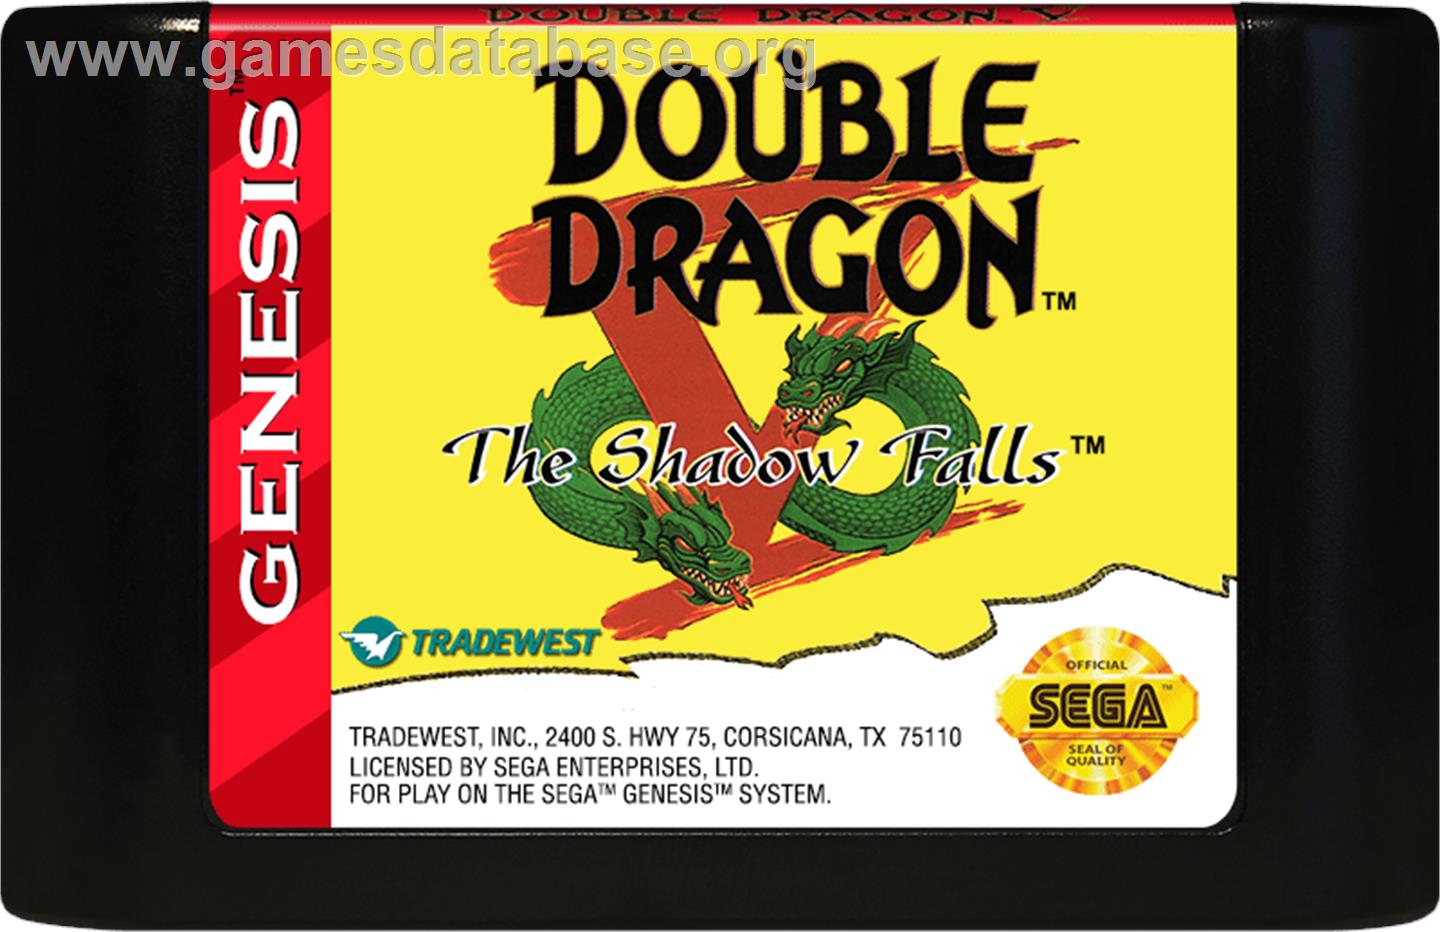 Double Dragon V: The Shadow Falls - Sega Genesis - Artwork - Cartridge